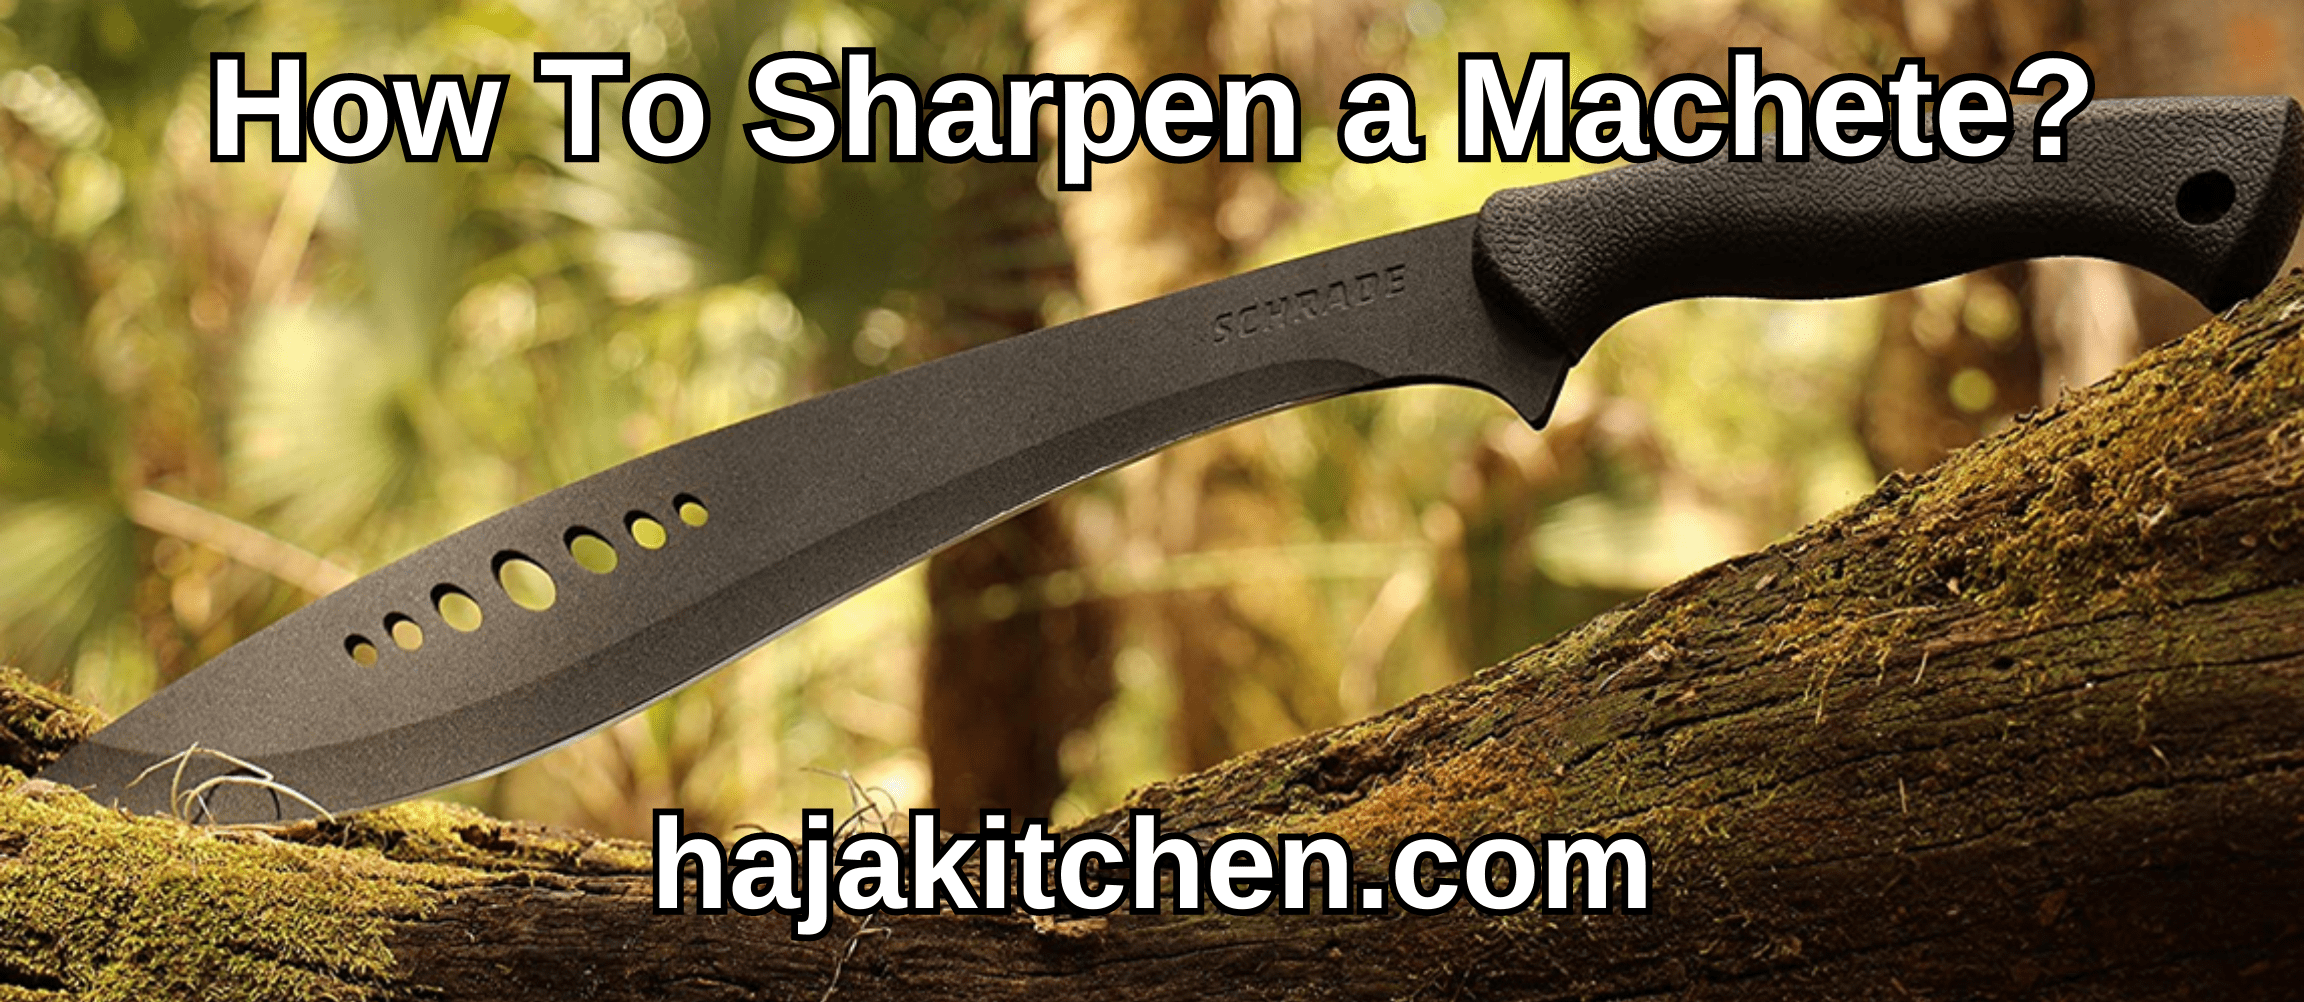 How To Sharpen a Machete